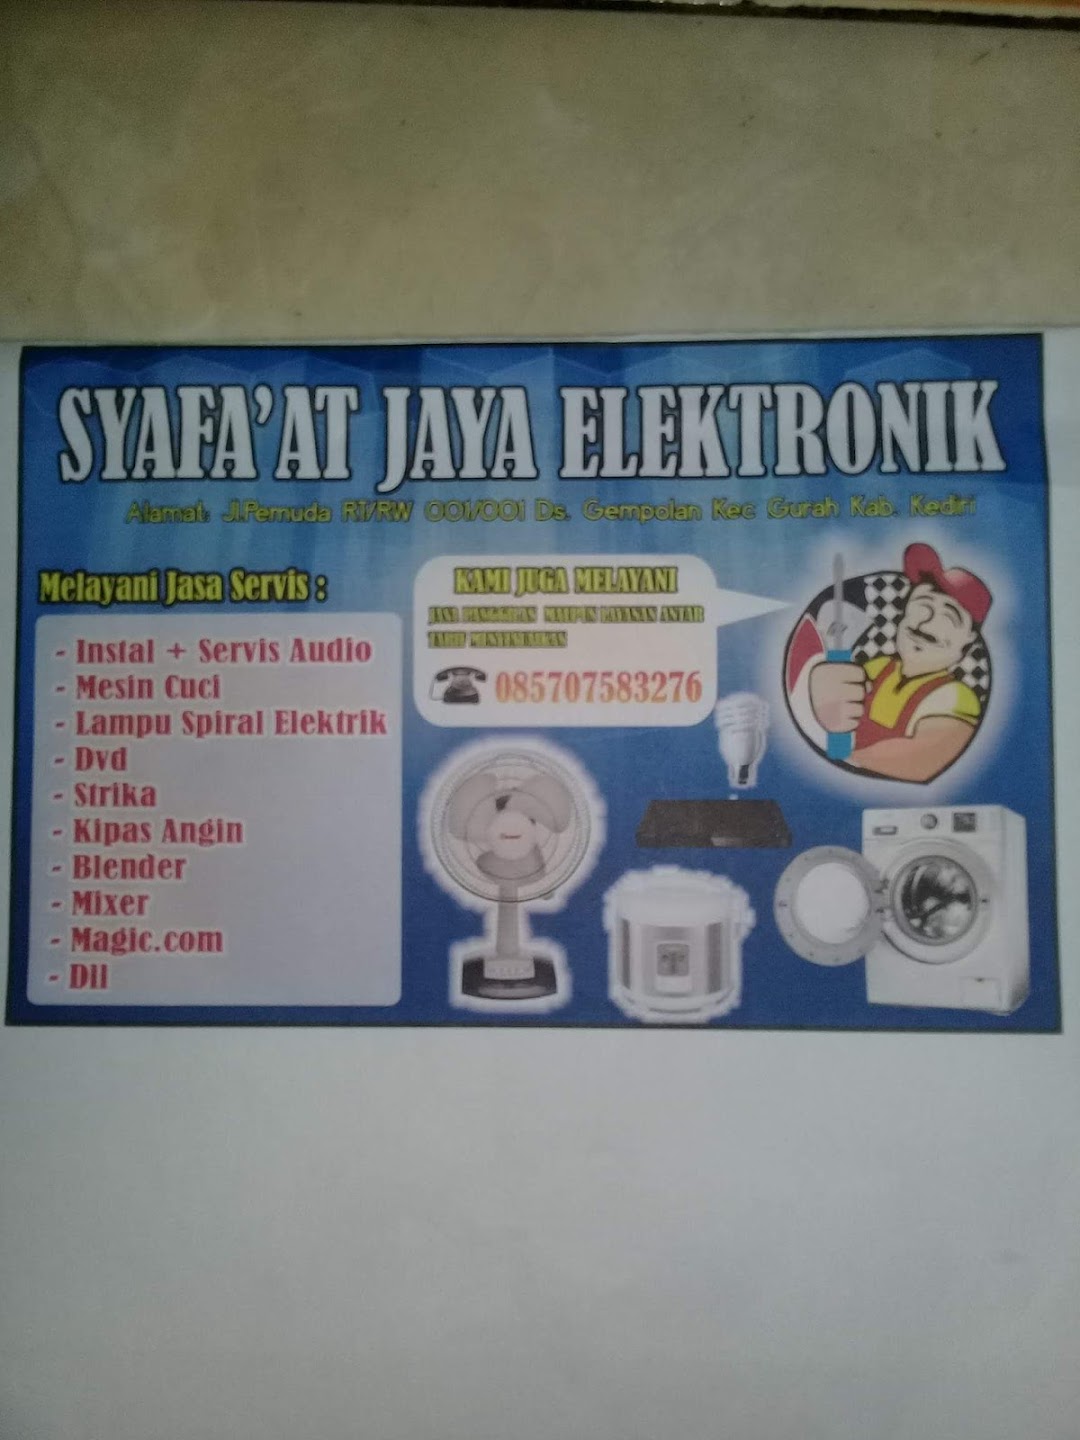 Syafaat Jaya Elektronik